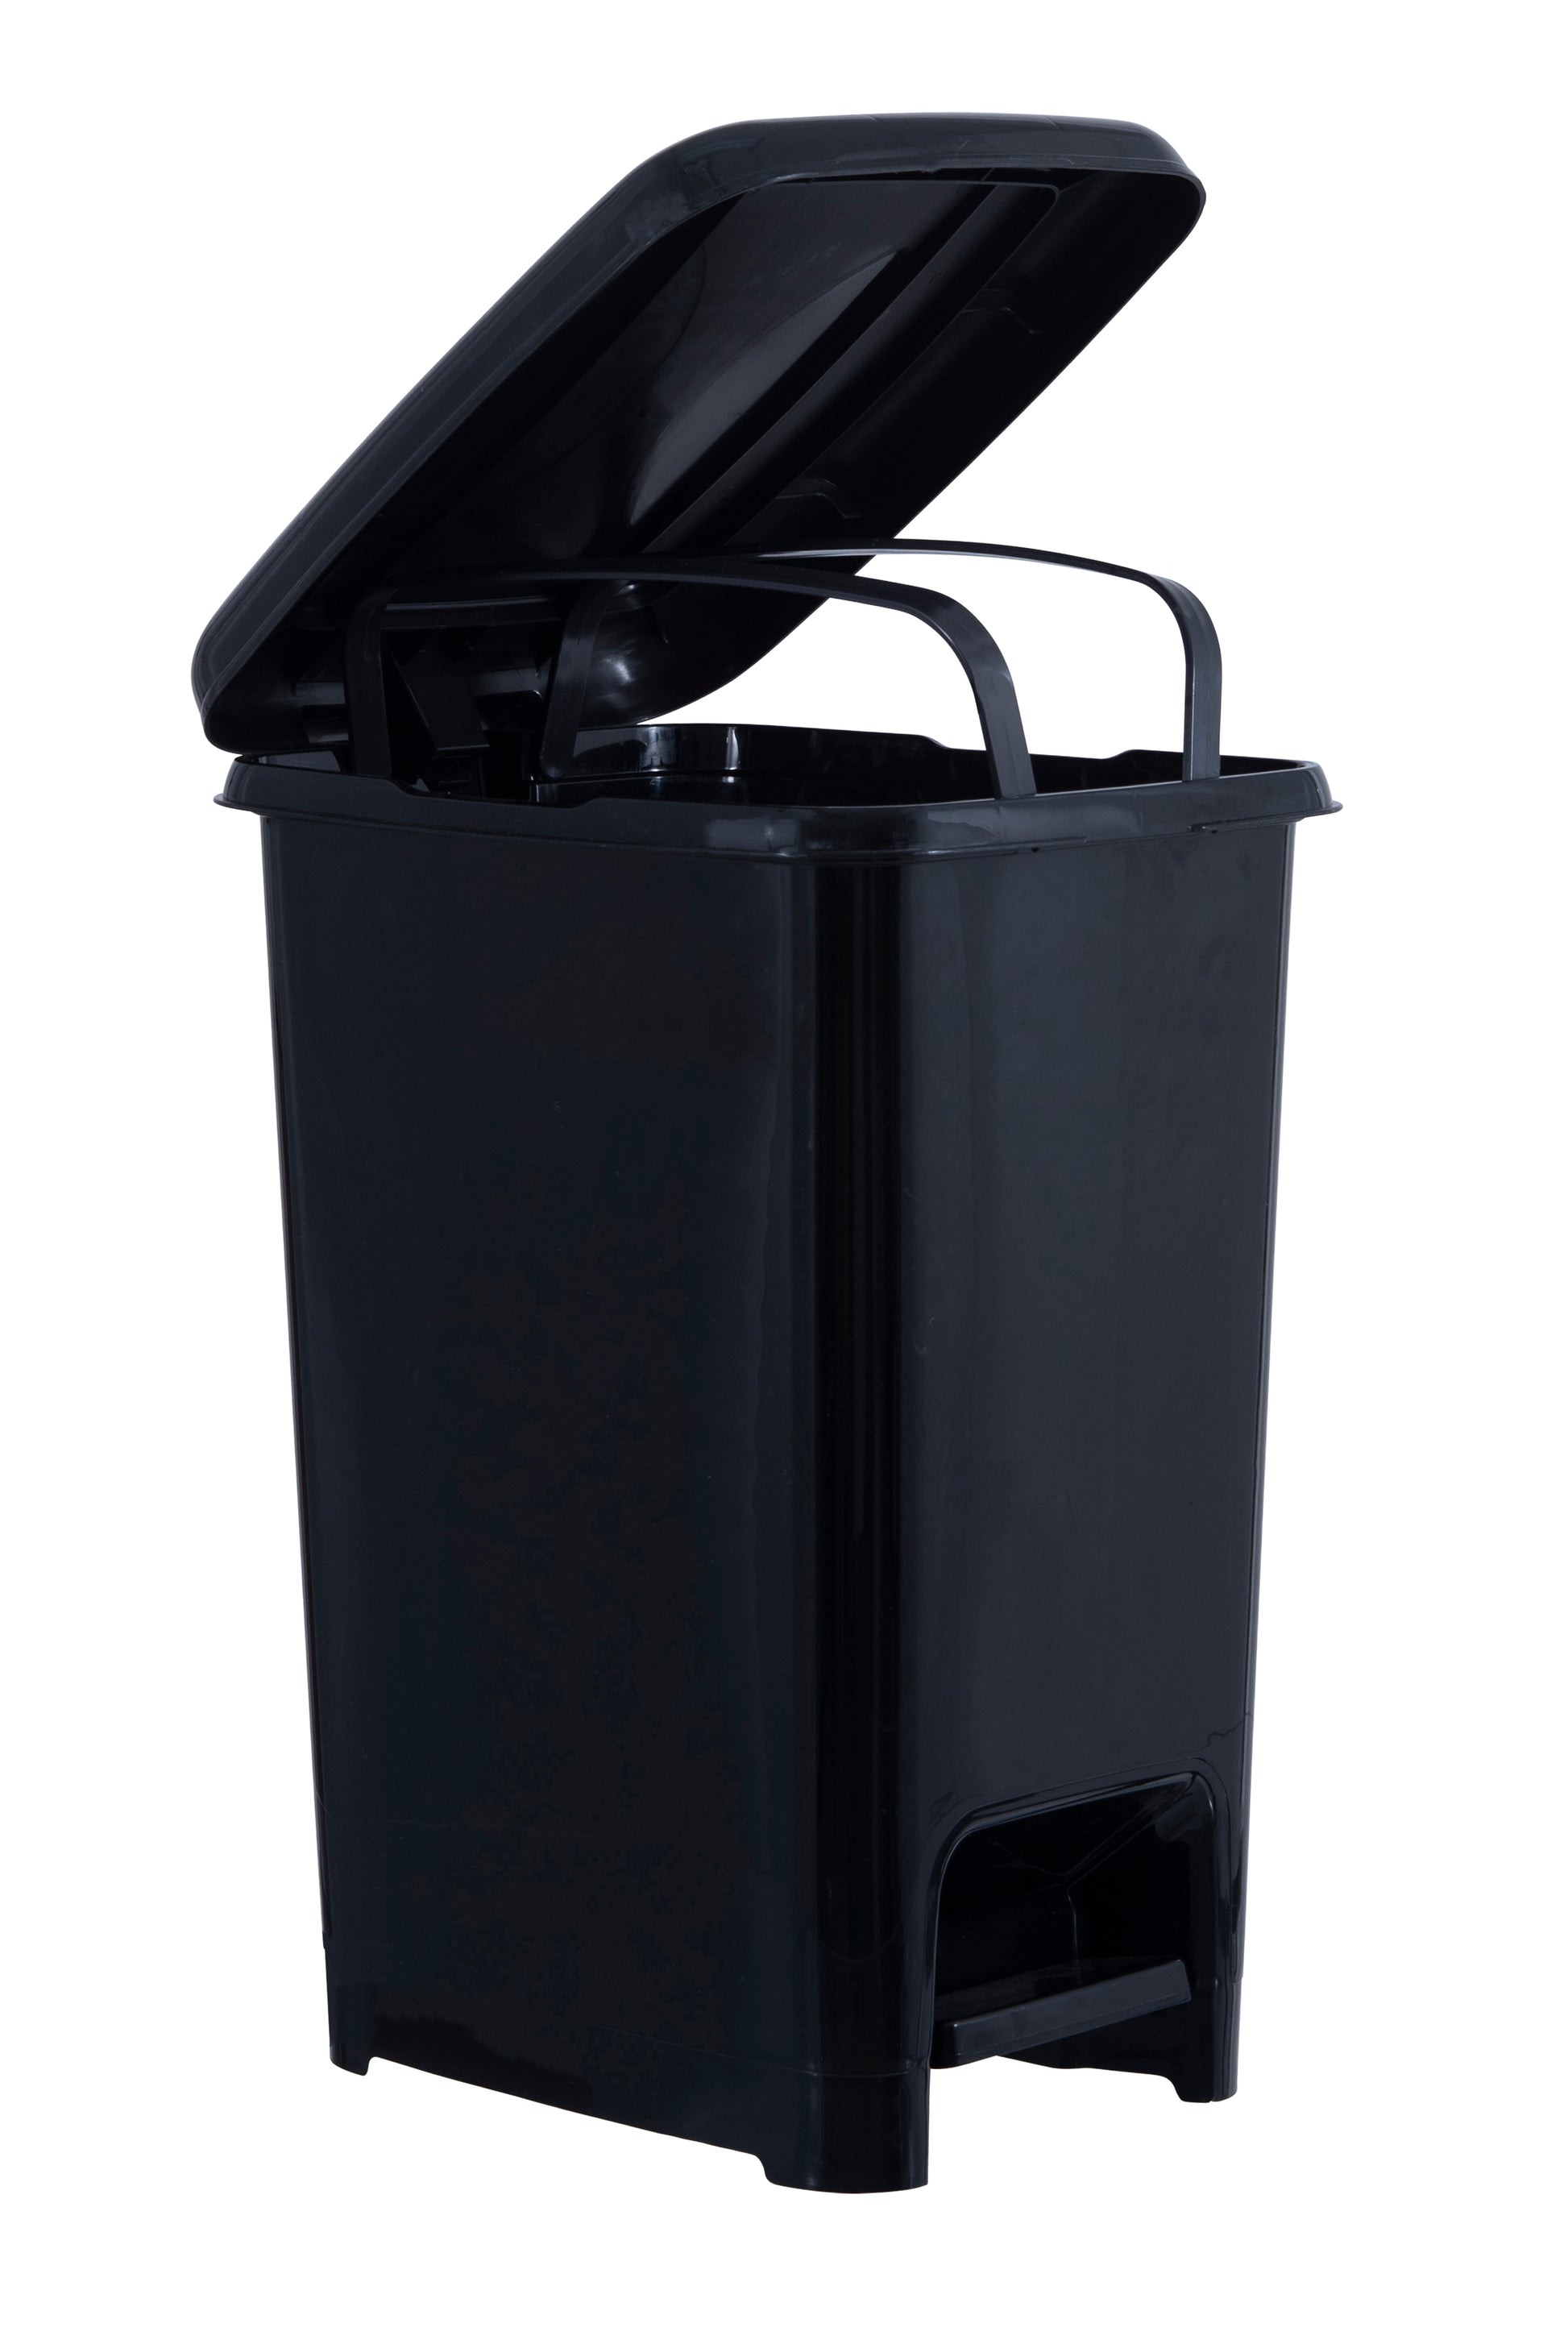 Superio Slim Step on Pedal Plastic Trash Can, Waste Bin - 42 qt, White Smoke